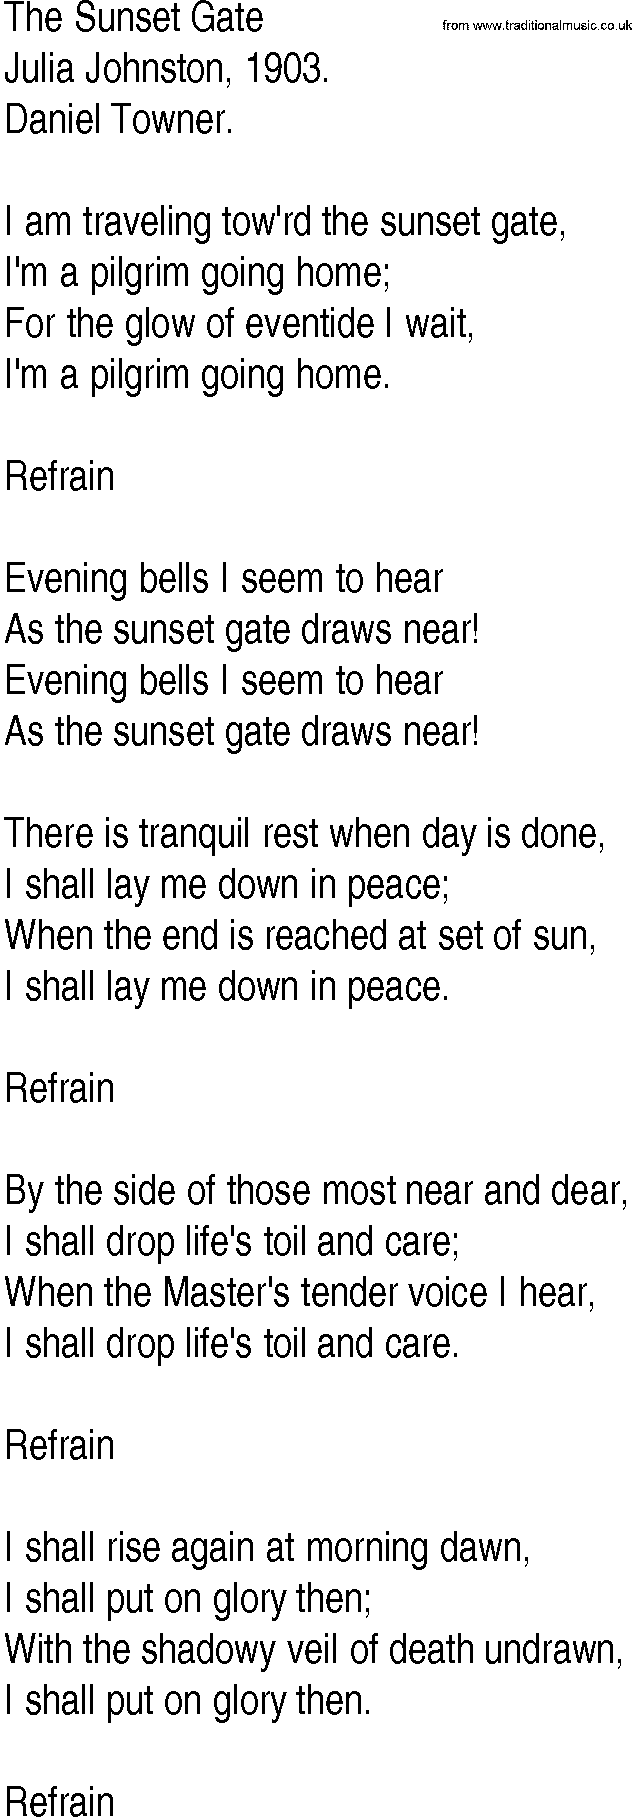 Hymn and Gospel Song: The Sunset Gate by Julia Johnston lyrics